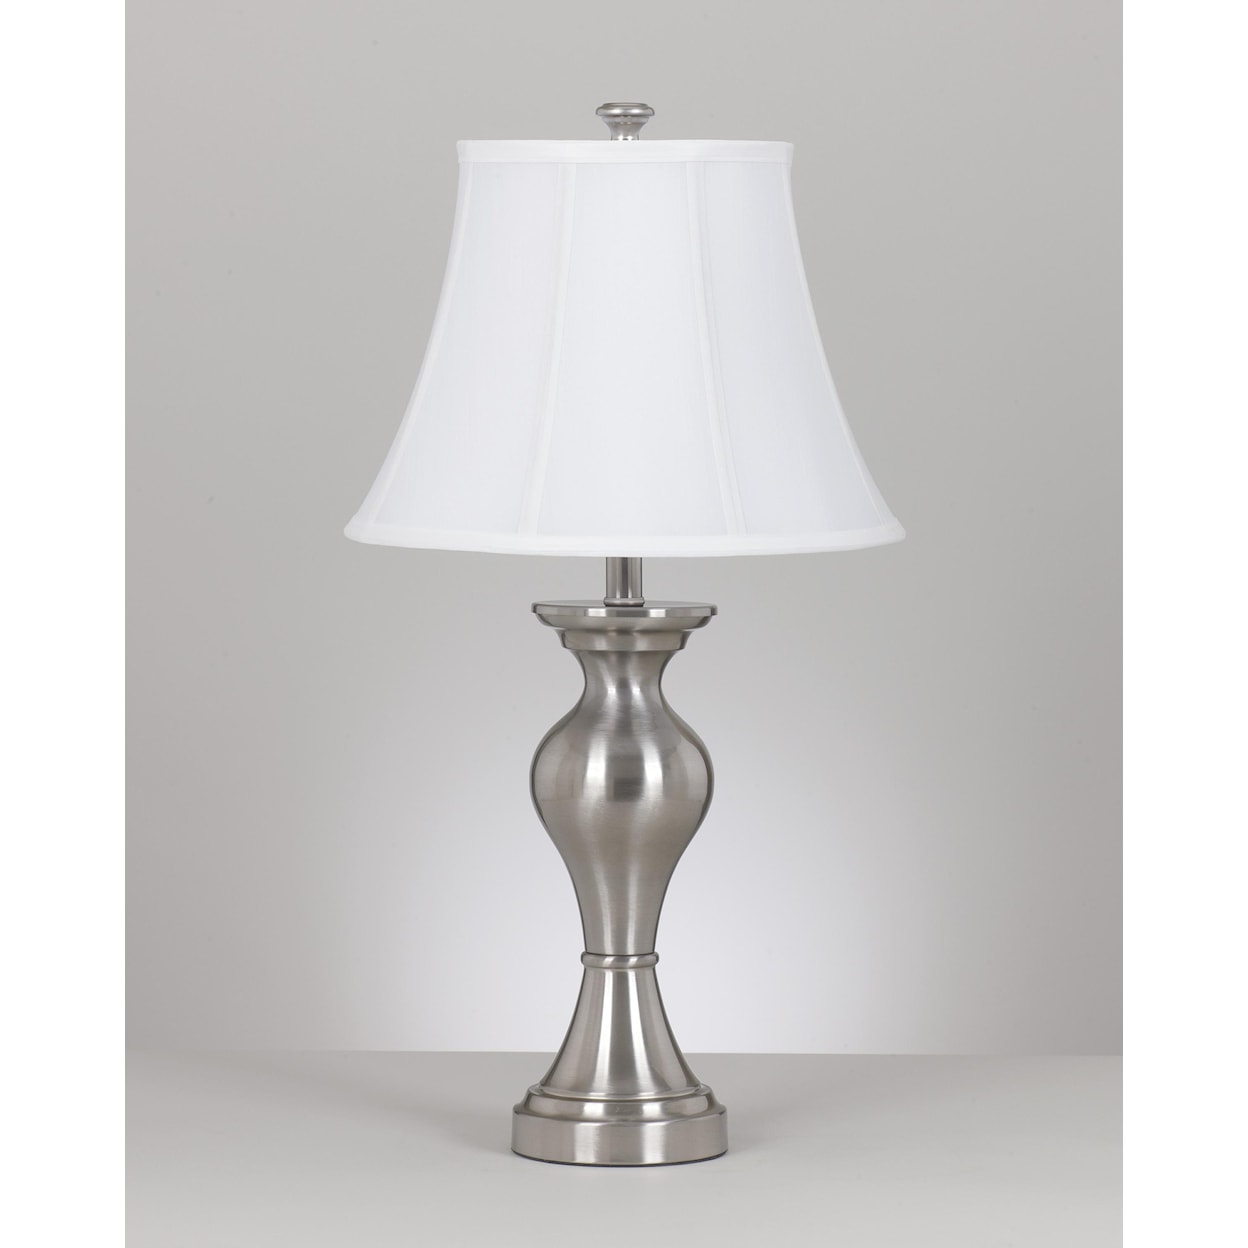 Ashley Furniture Signature Design Lamps - Vintage Style Set of 2 Rishona Metal Table Lamps